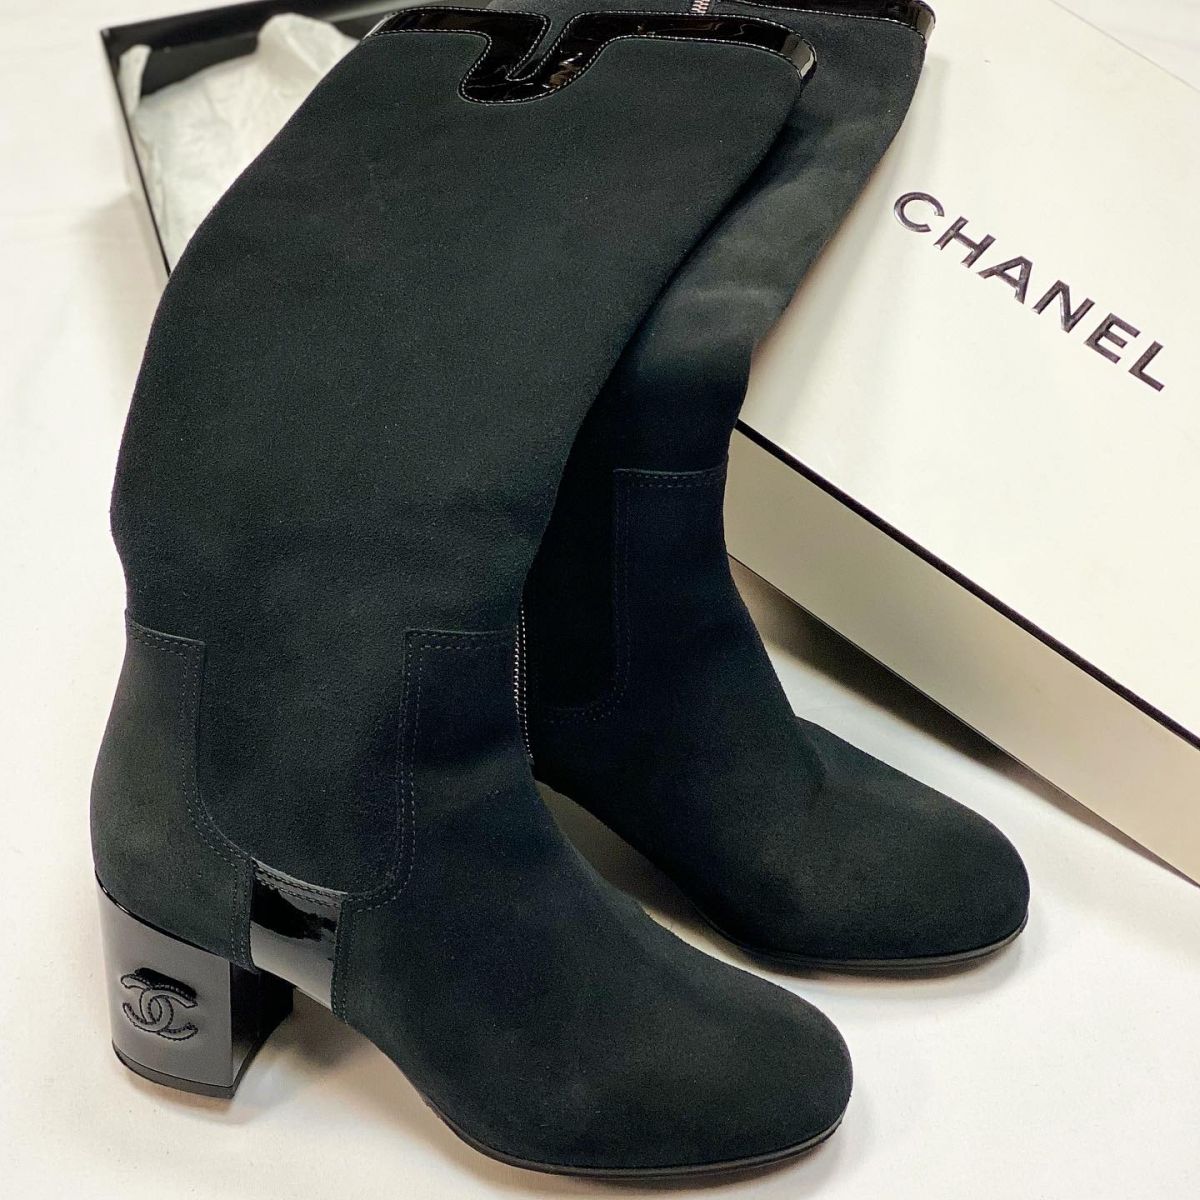 Сапоги Chanel размер 39 цена 38 463 руб 